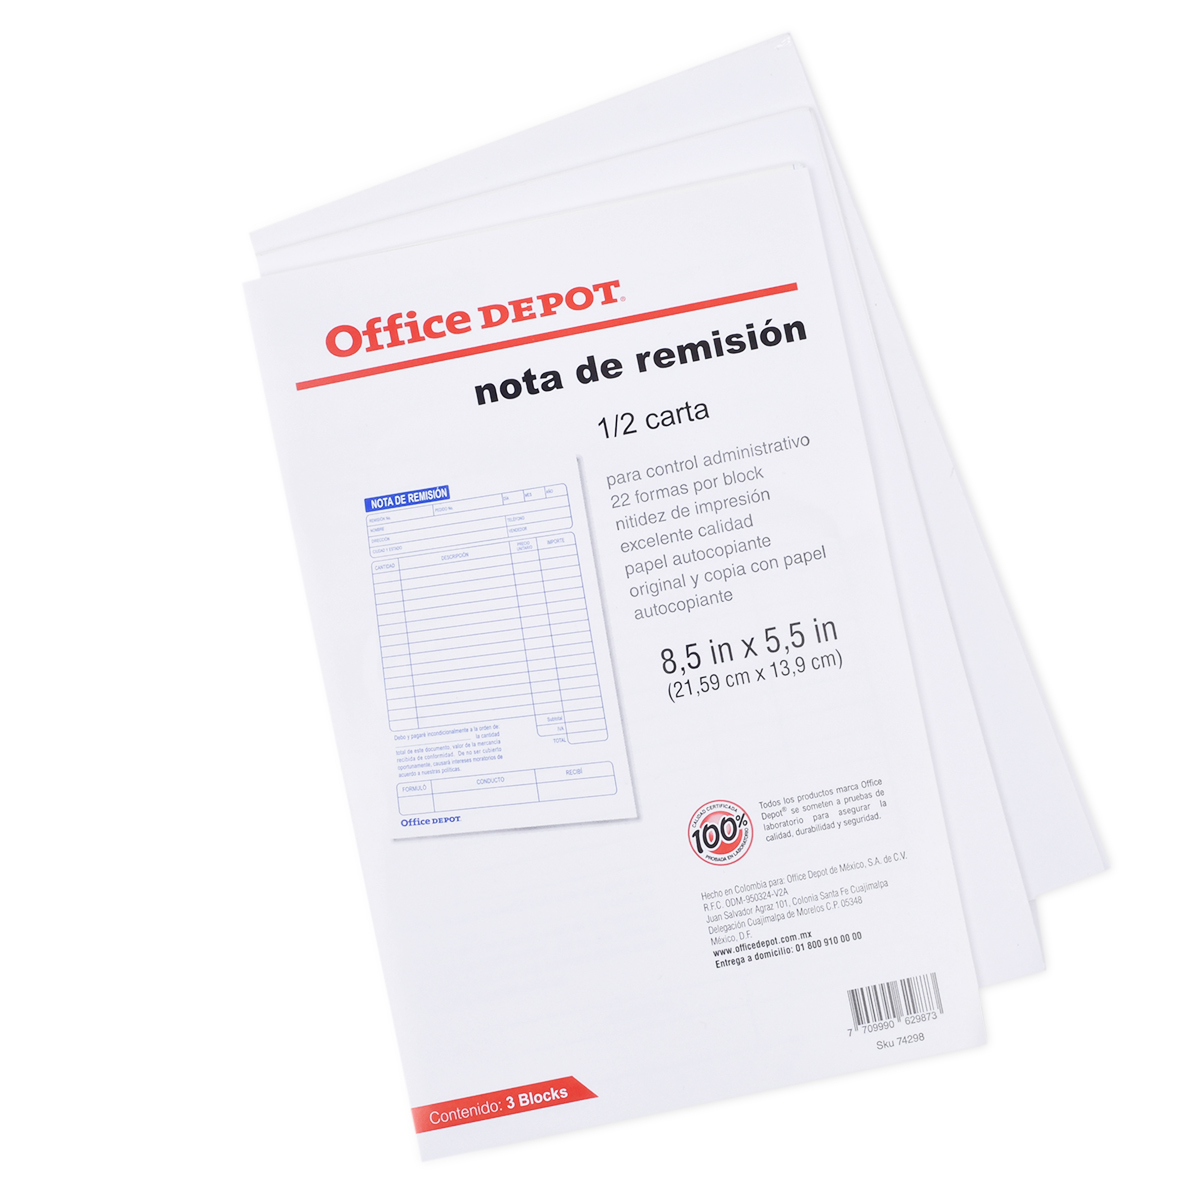 NOTA DE REMISION OFFICE DEPOT (1 2 CARTA, 3 PZS.) | Office Depot Mexico